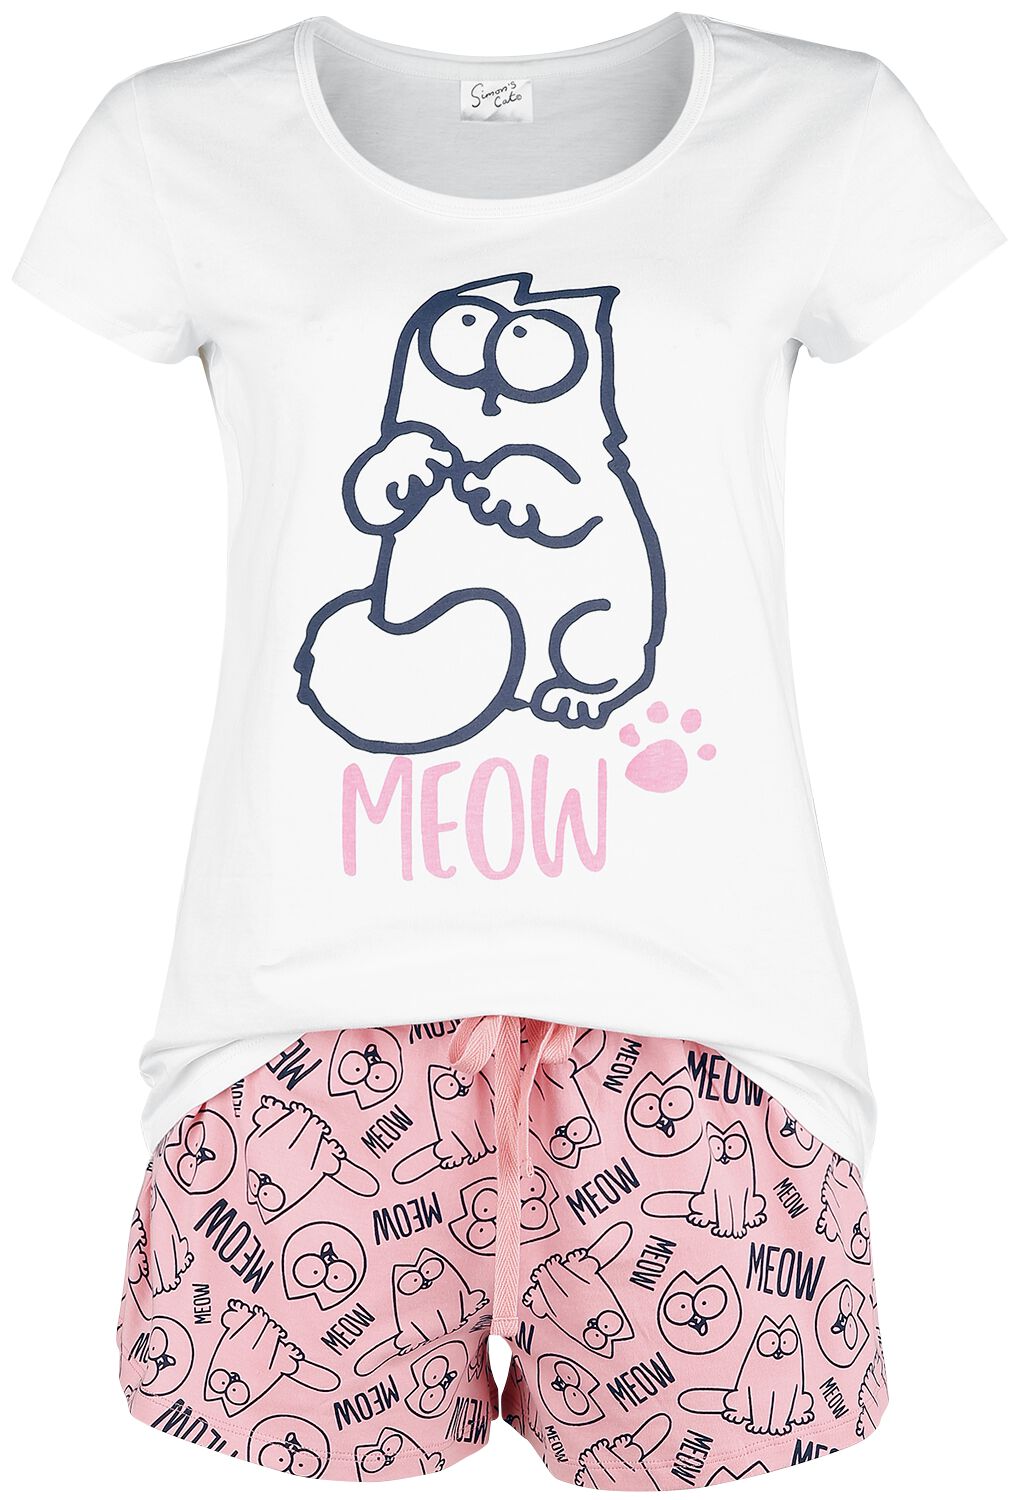 simons cat schlafanzug - meow - m bis 3xl - fÃ¼r damen - grÃ¶ÃŸe l - - emp exklusives merchandise! weiÃŸ/rosa donna